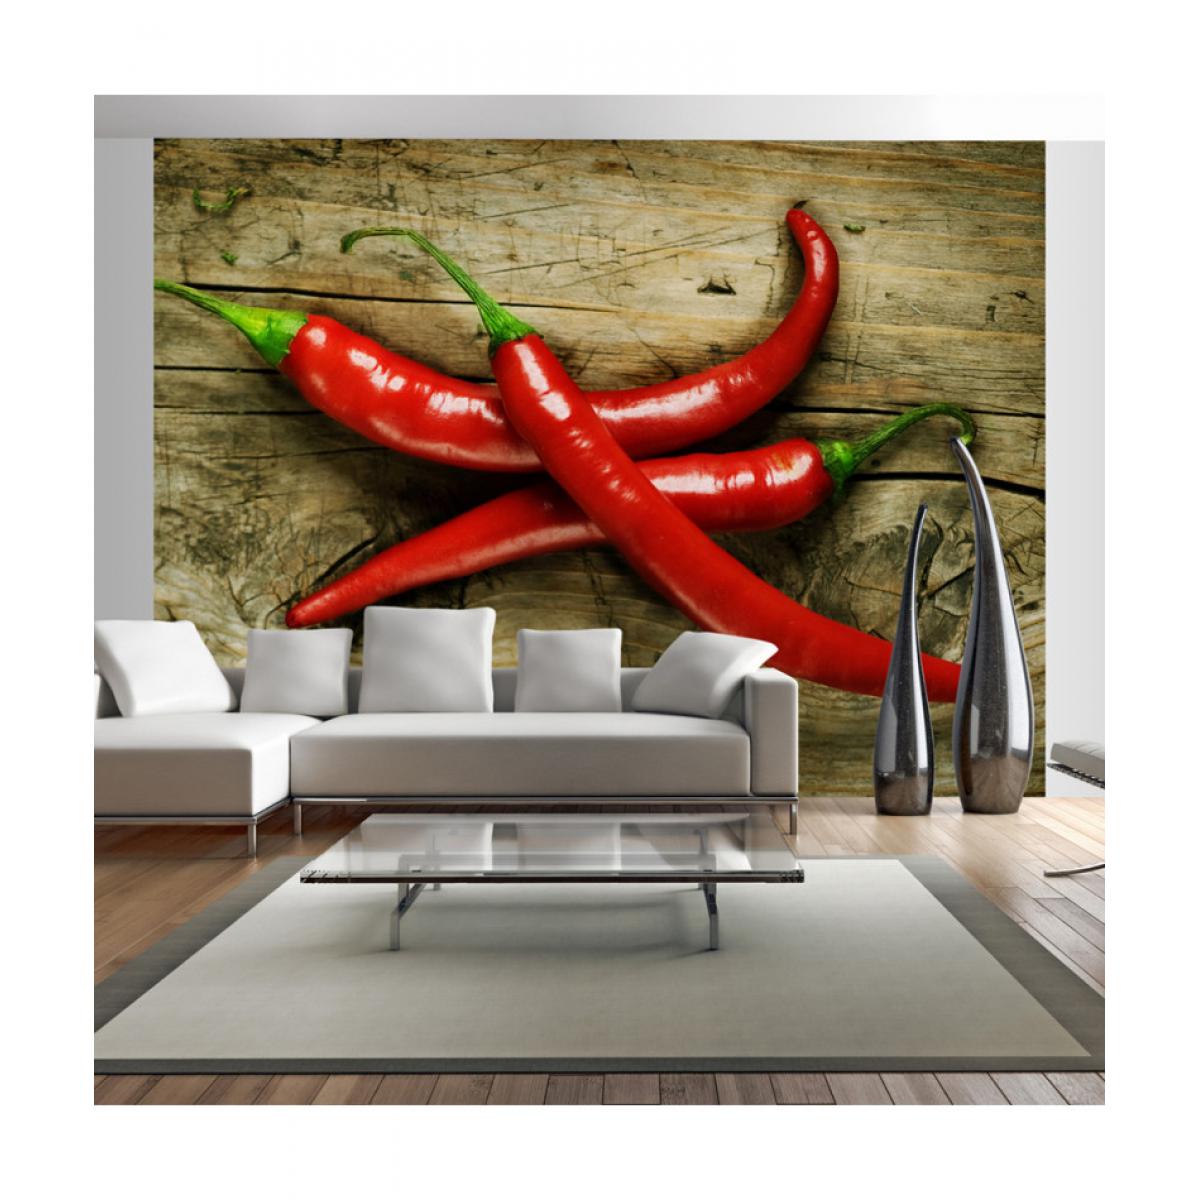 Artgeist - Papier peint - Spicy chili peppers 350x270 - Papier peint